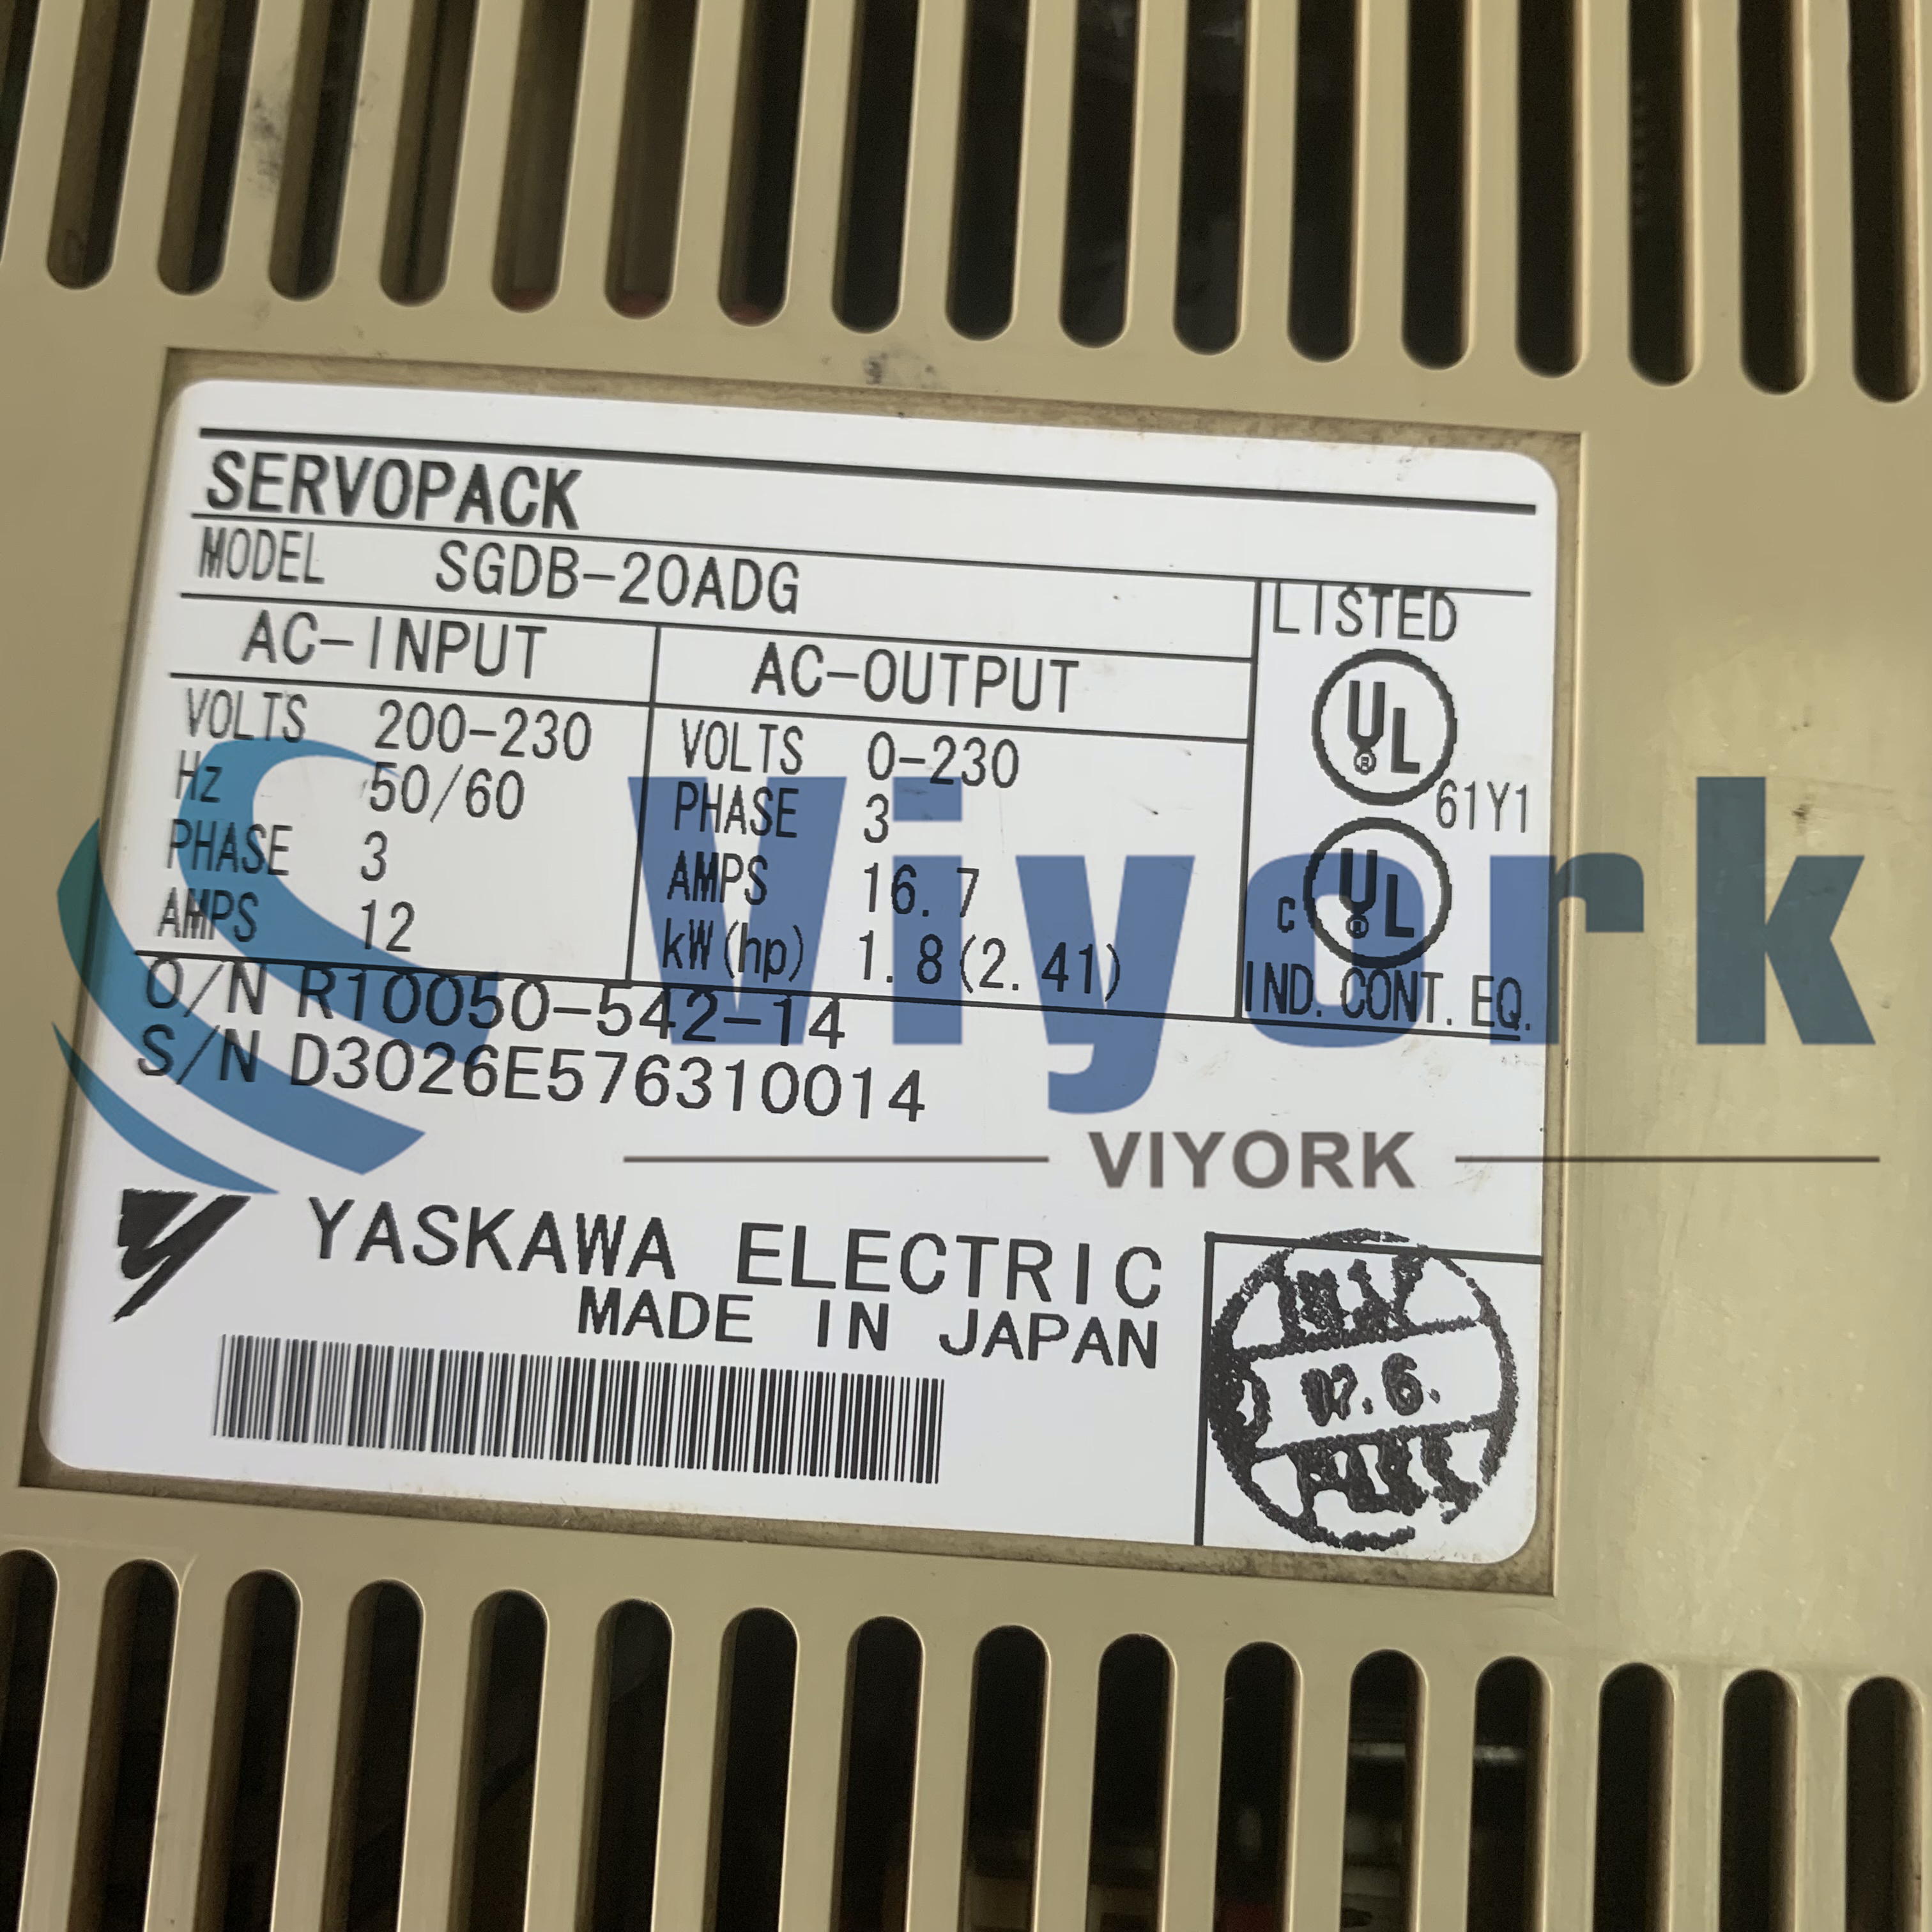 Yaskawa SGDB-20ADG SERVO AMPLIFIER 16.7 AMP / 1.8KW 200-230VAC